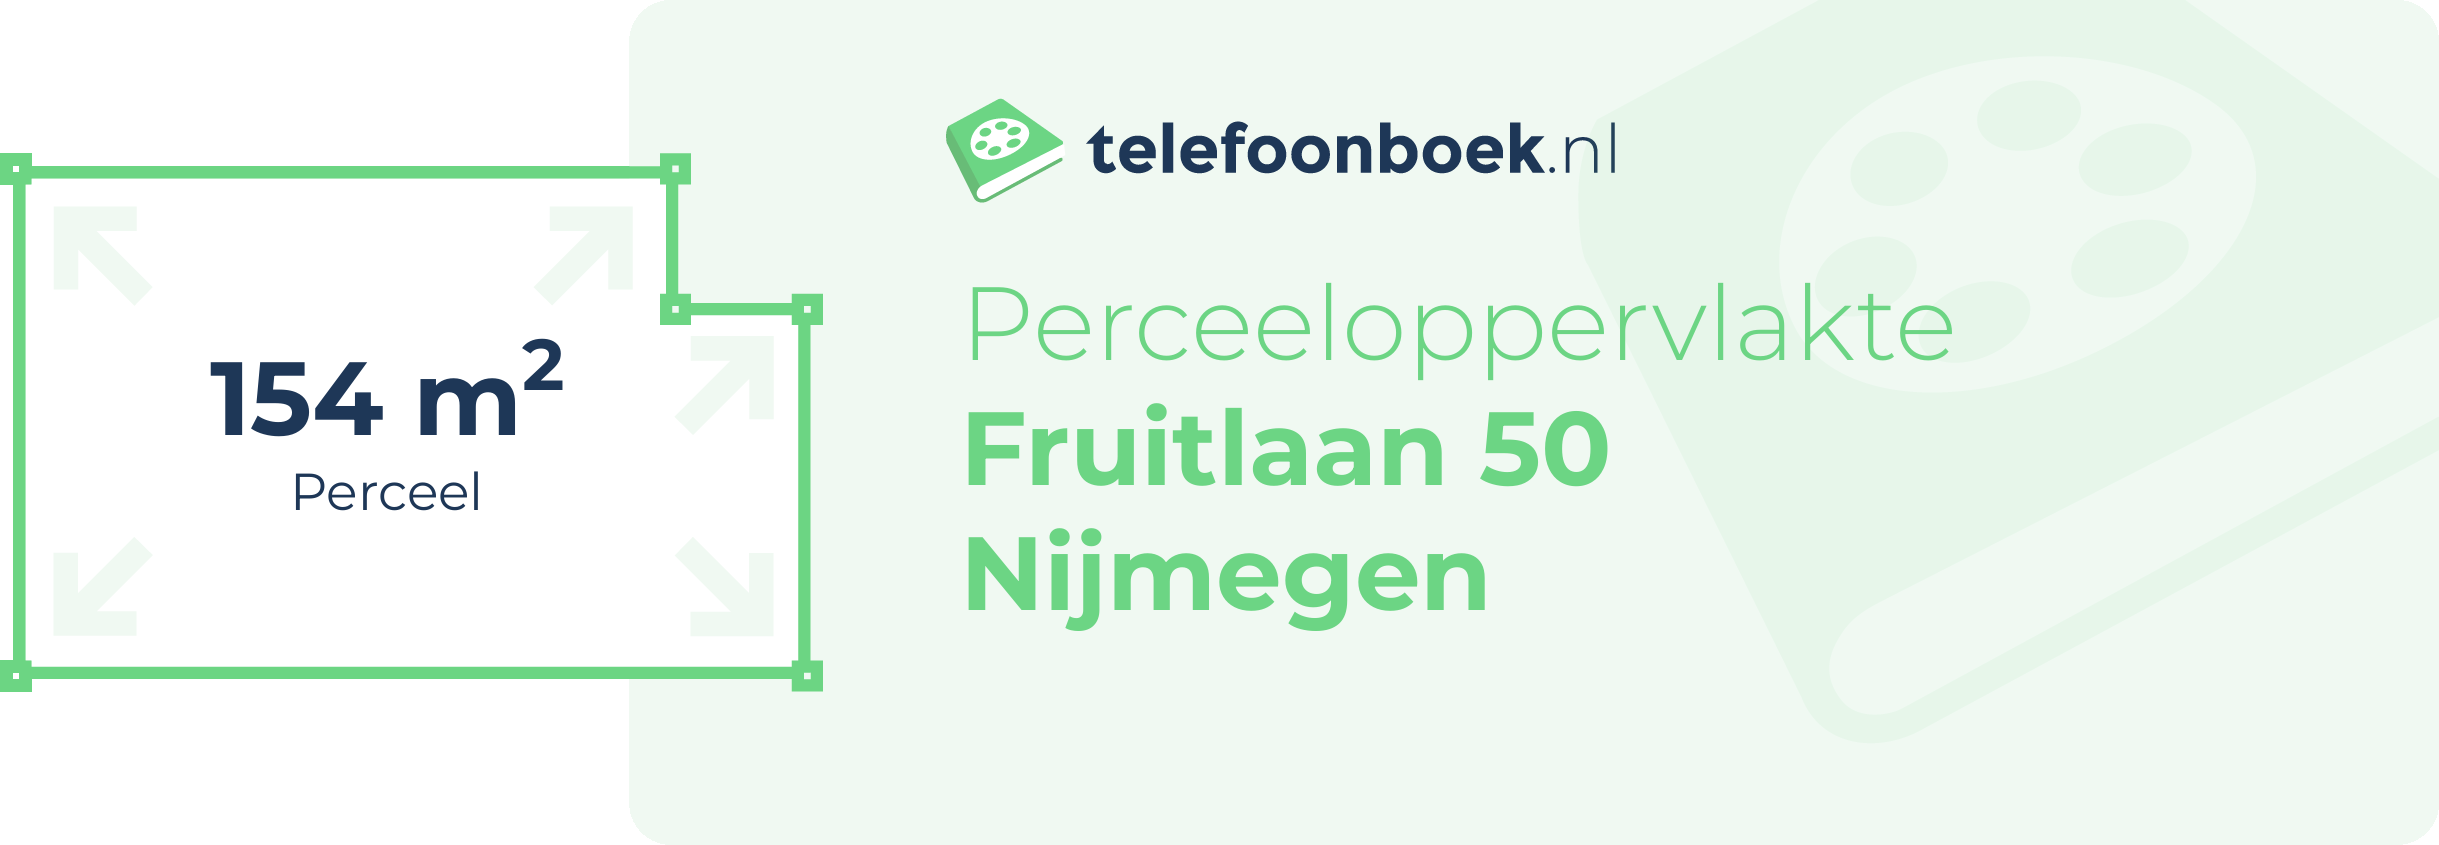 Perceeloppervlakte Fruitlaan 50 Nijmegen